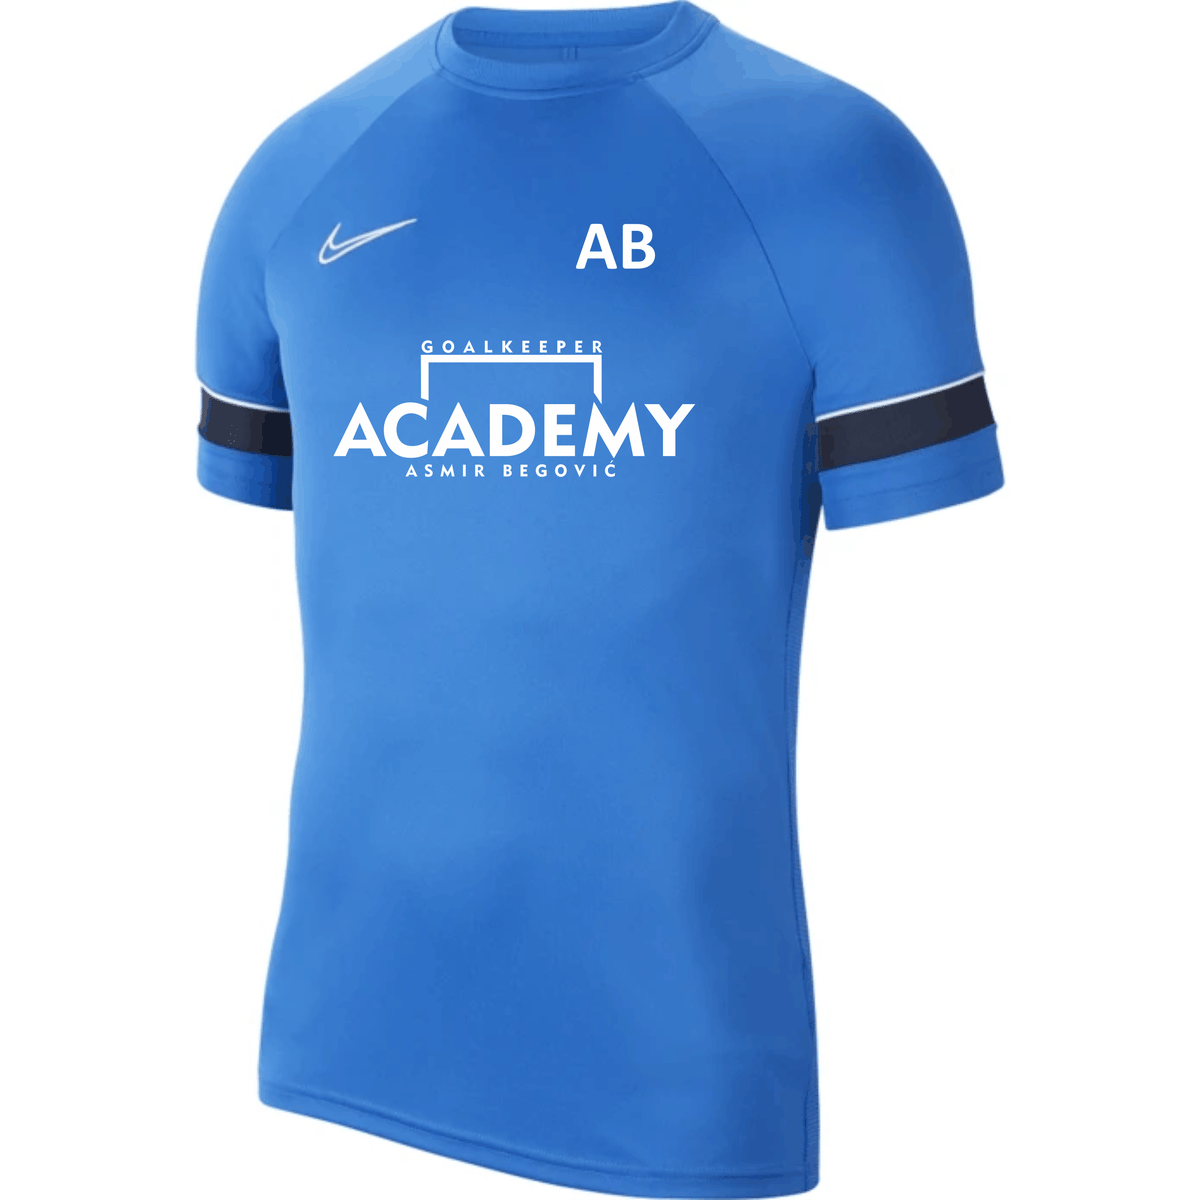 Asmir Begovic Academy Coaches - Nike Academy 21 Training Top